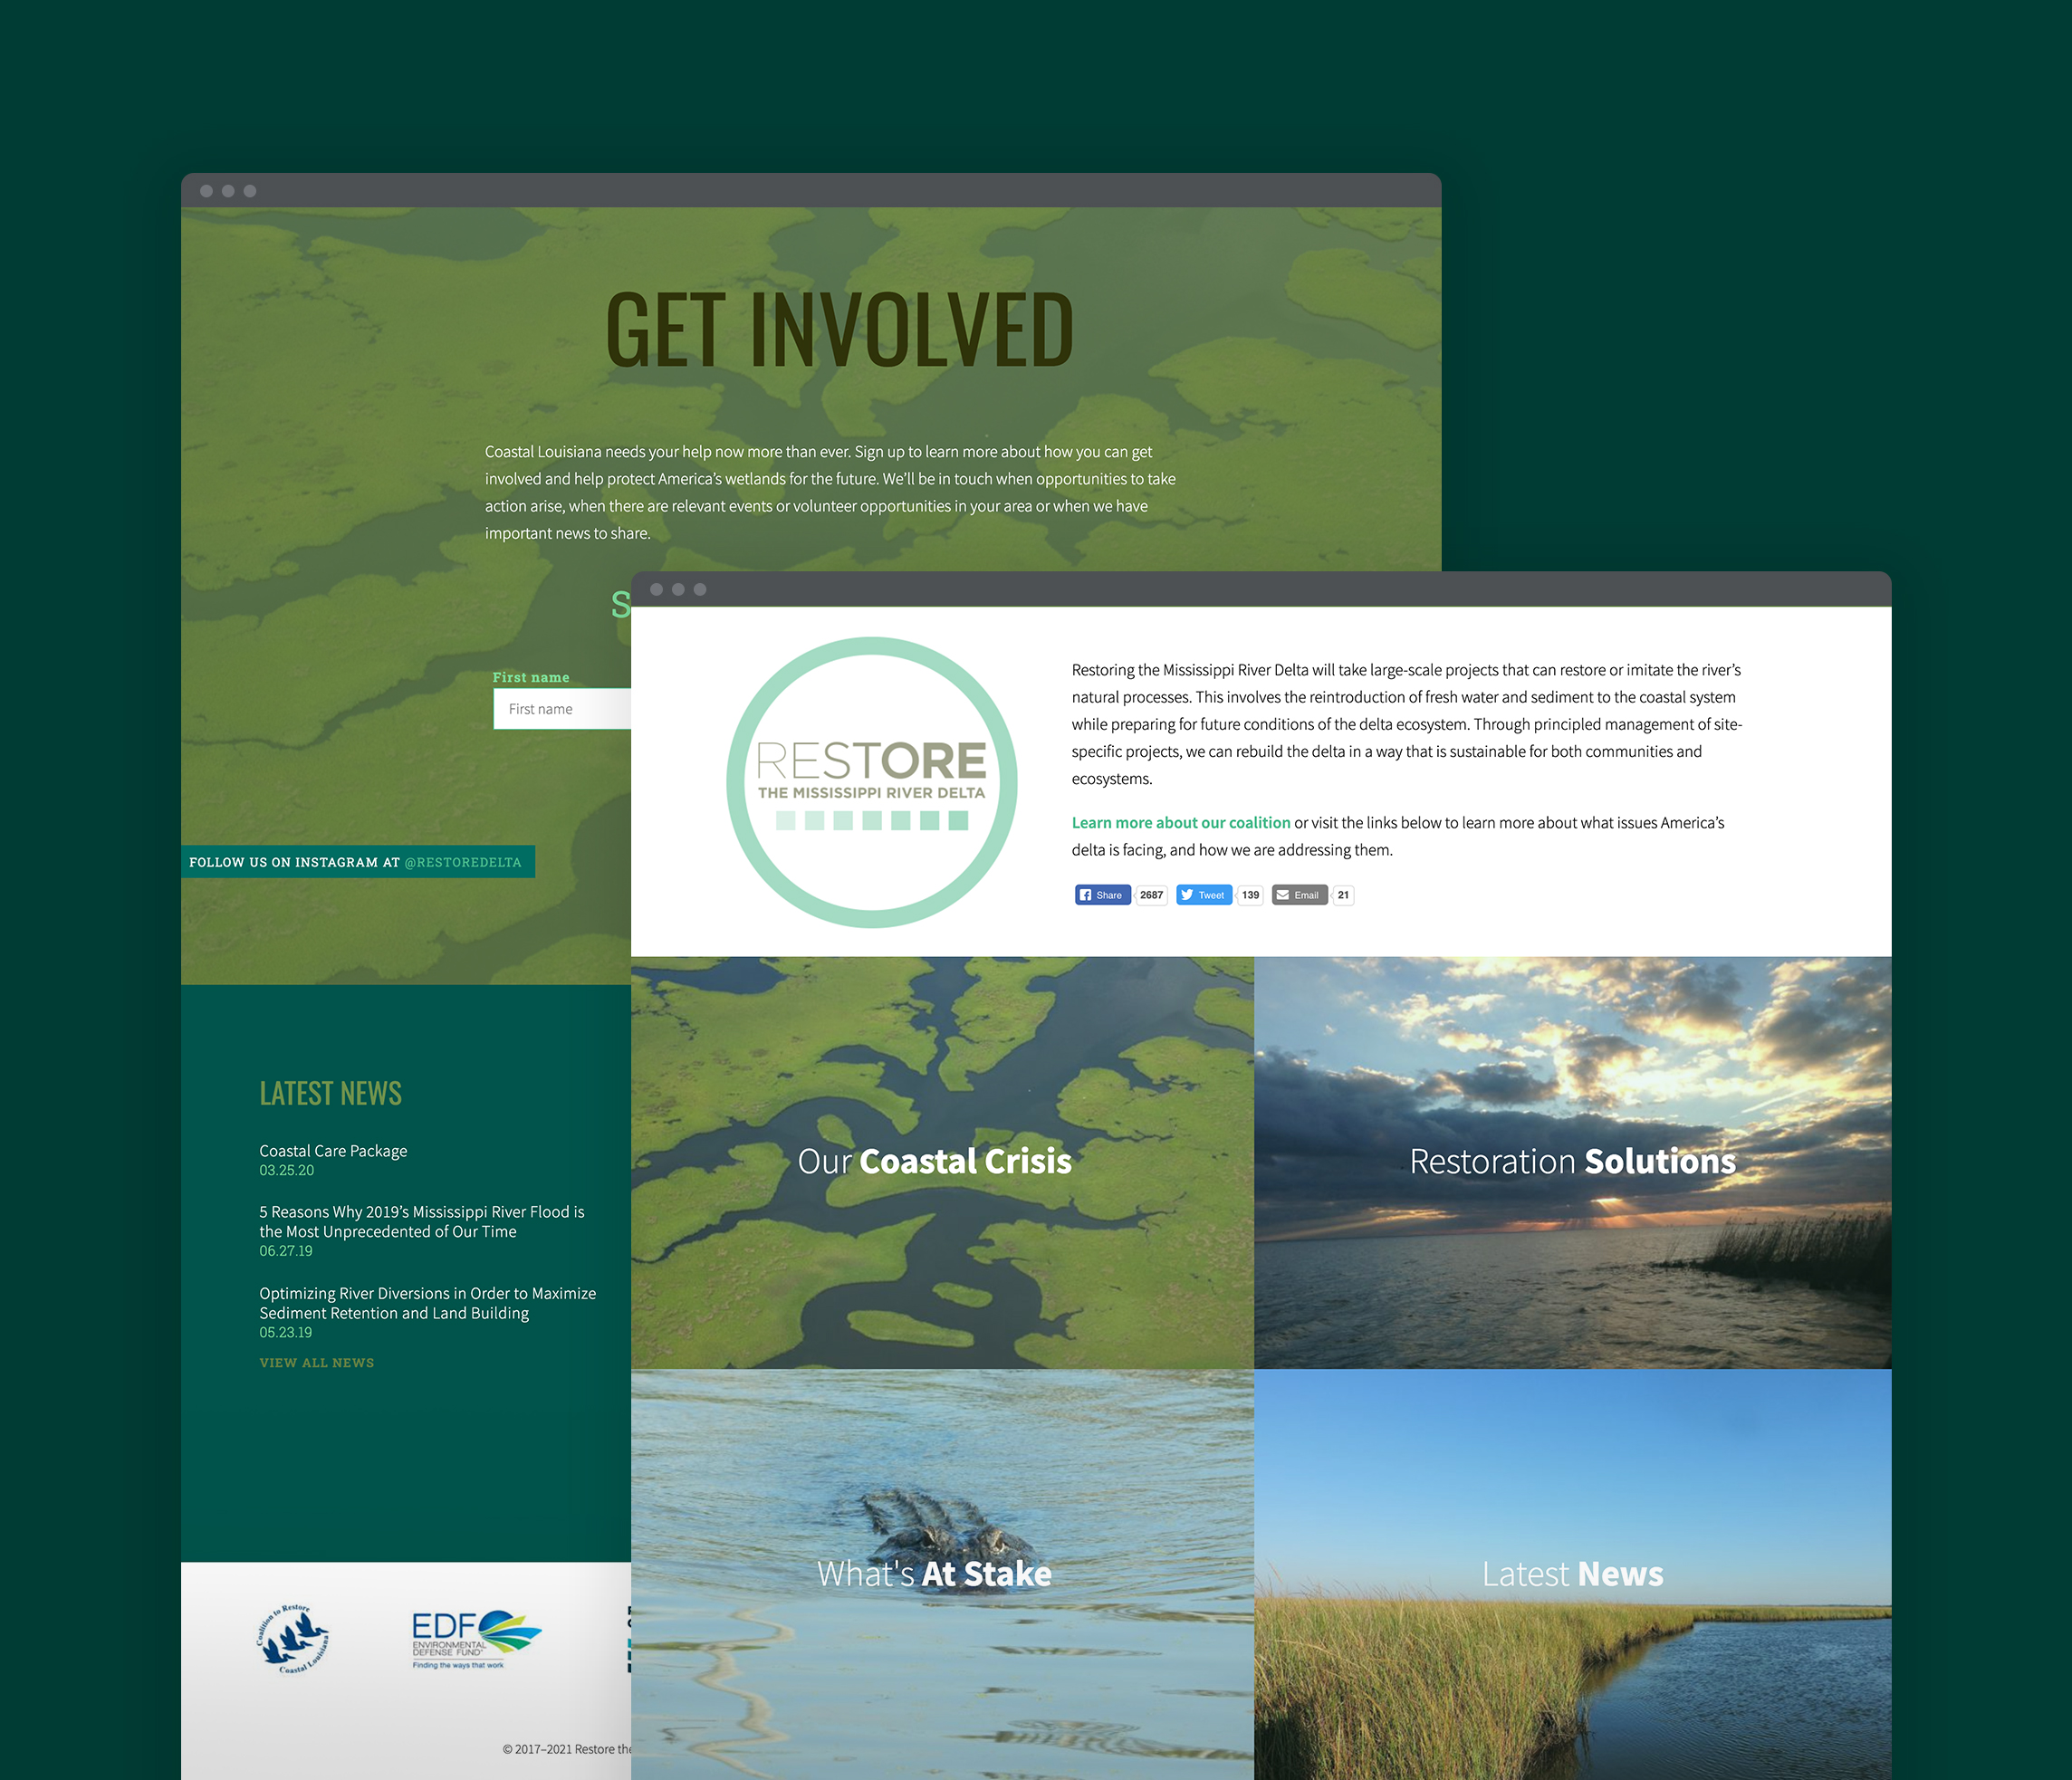 Restore the Mississippi River Delta Website